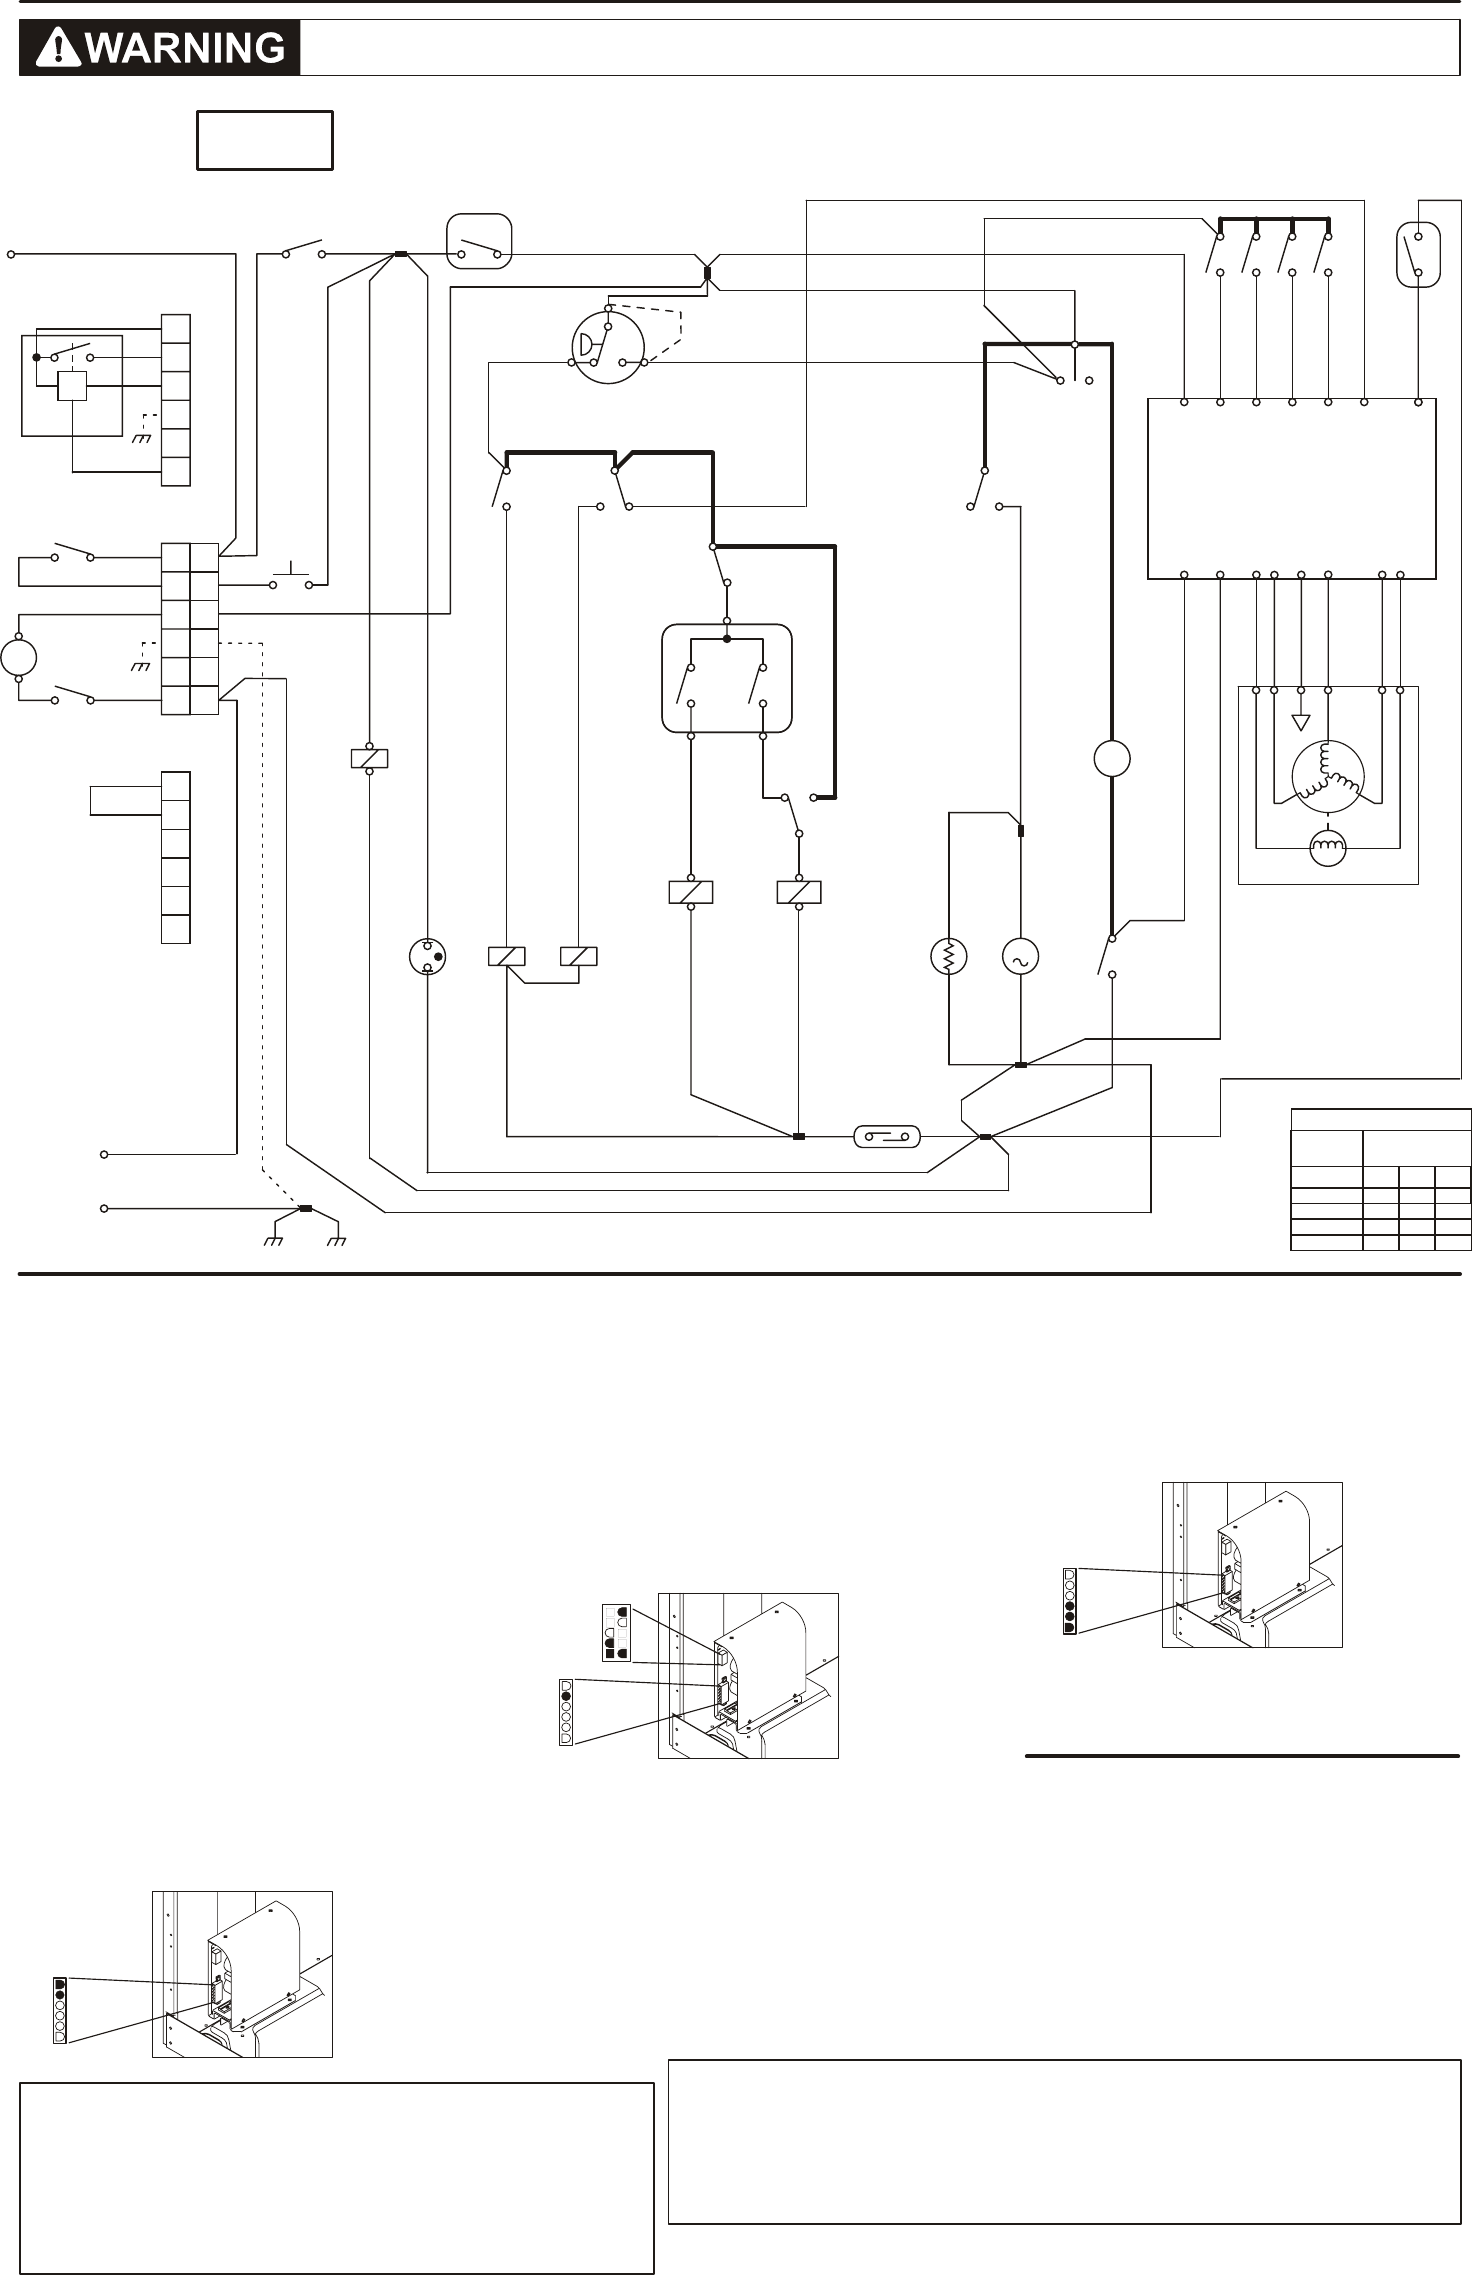 Wiring Diagram For Kenmore Washer Wiring Diagram